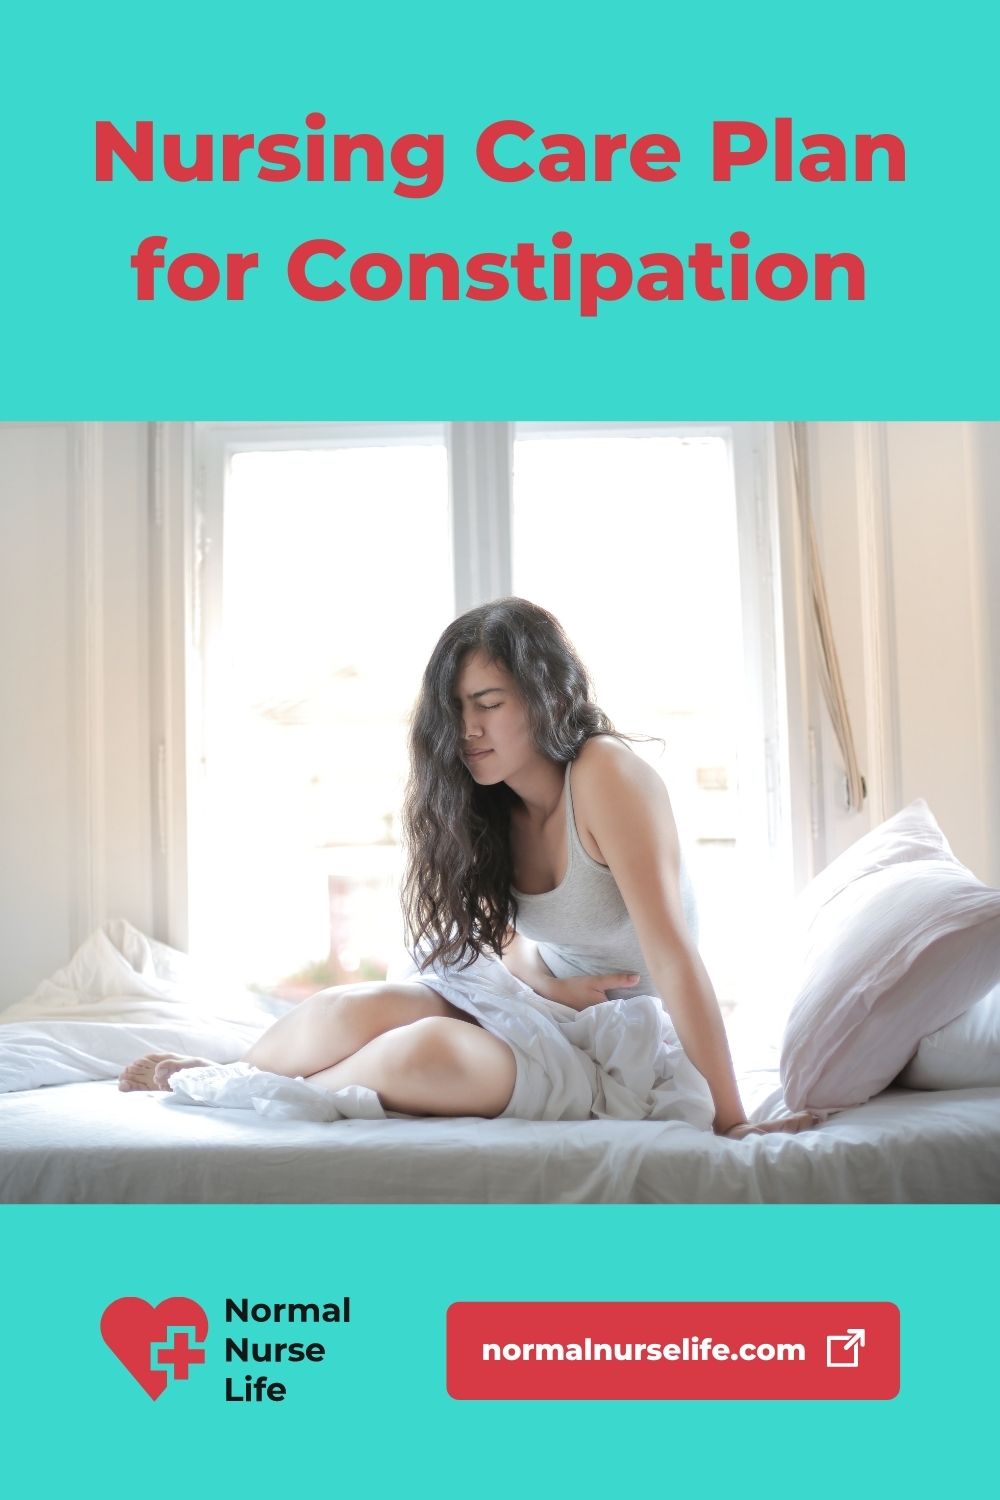 Nursing care plan for constipation